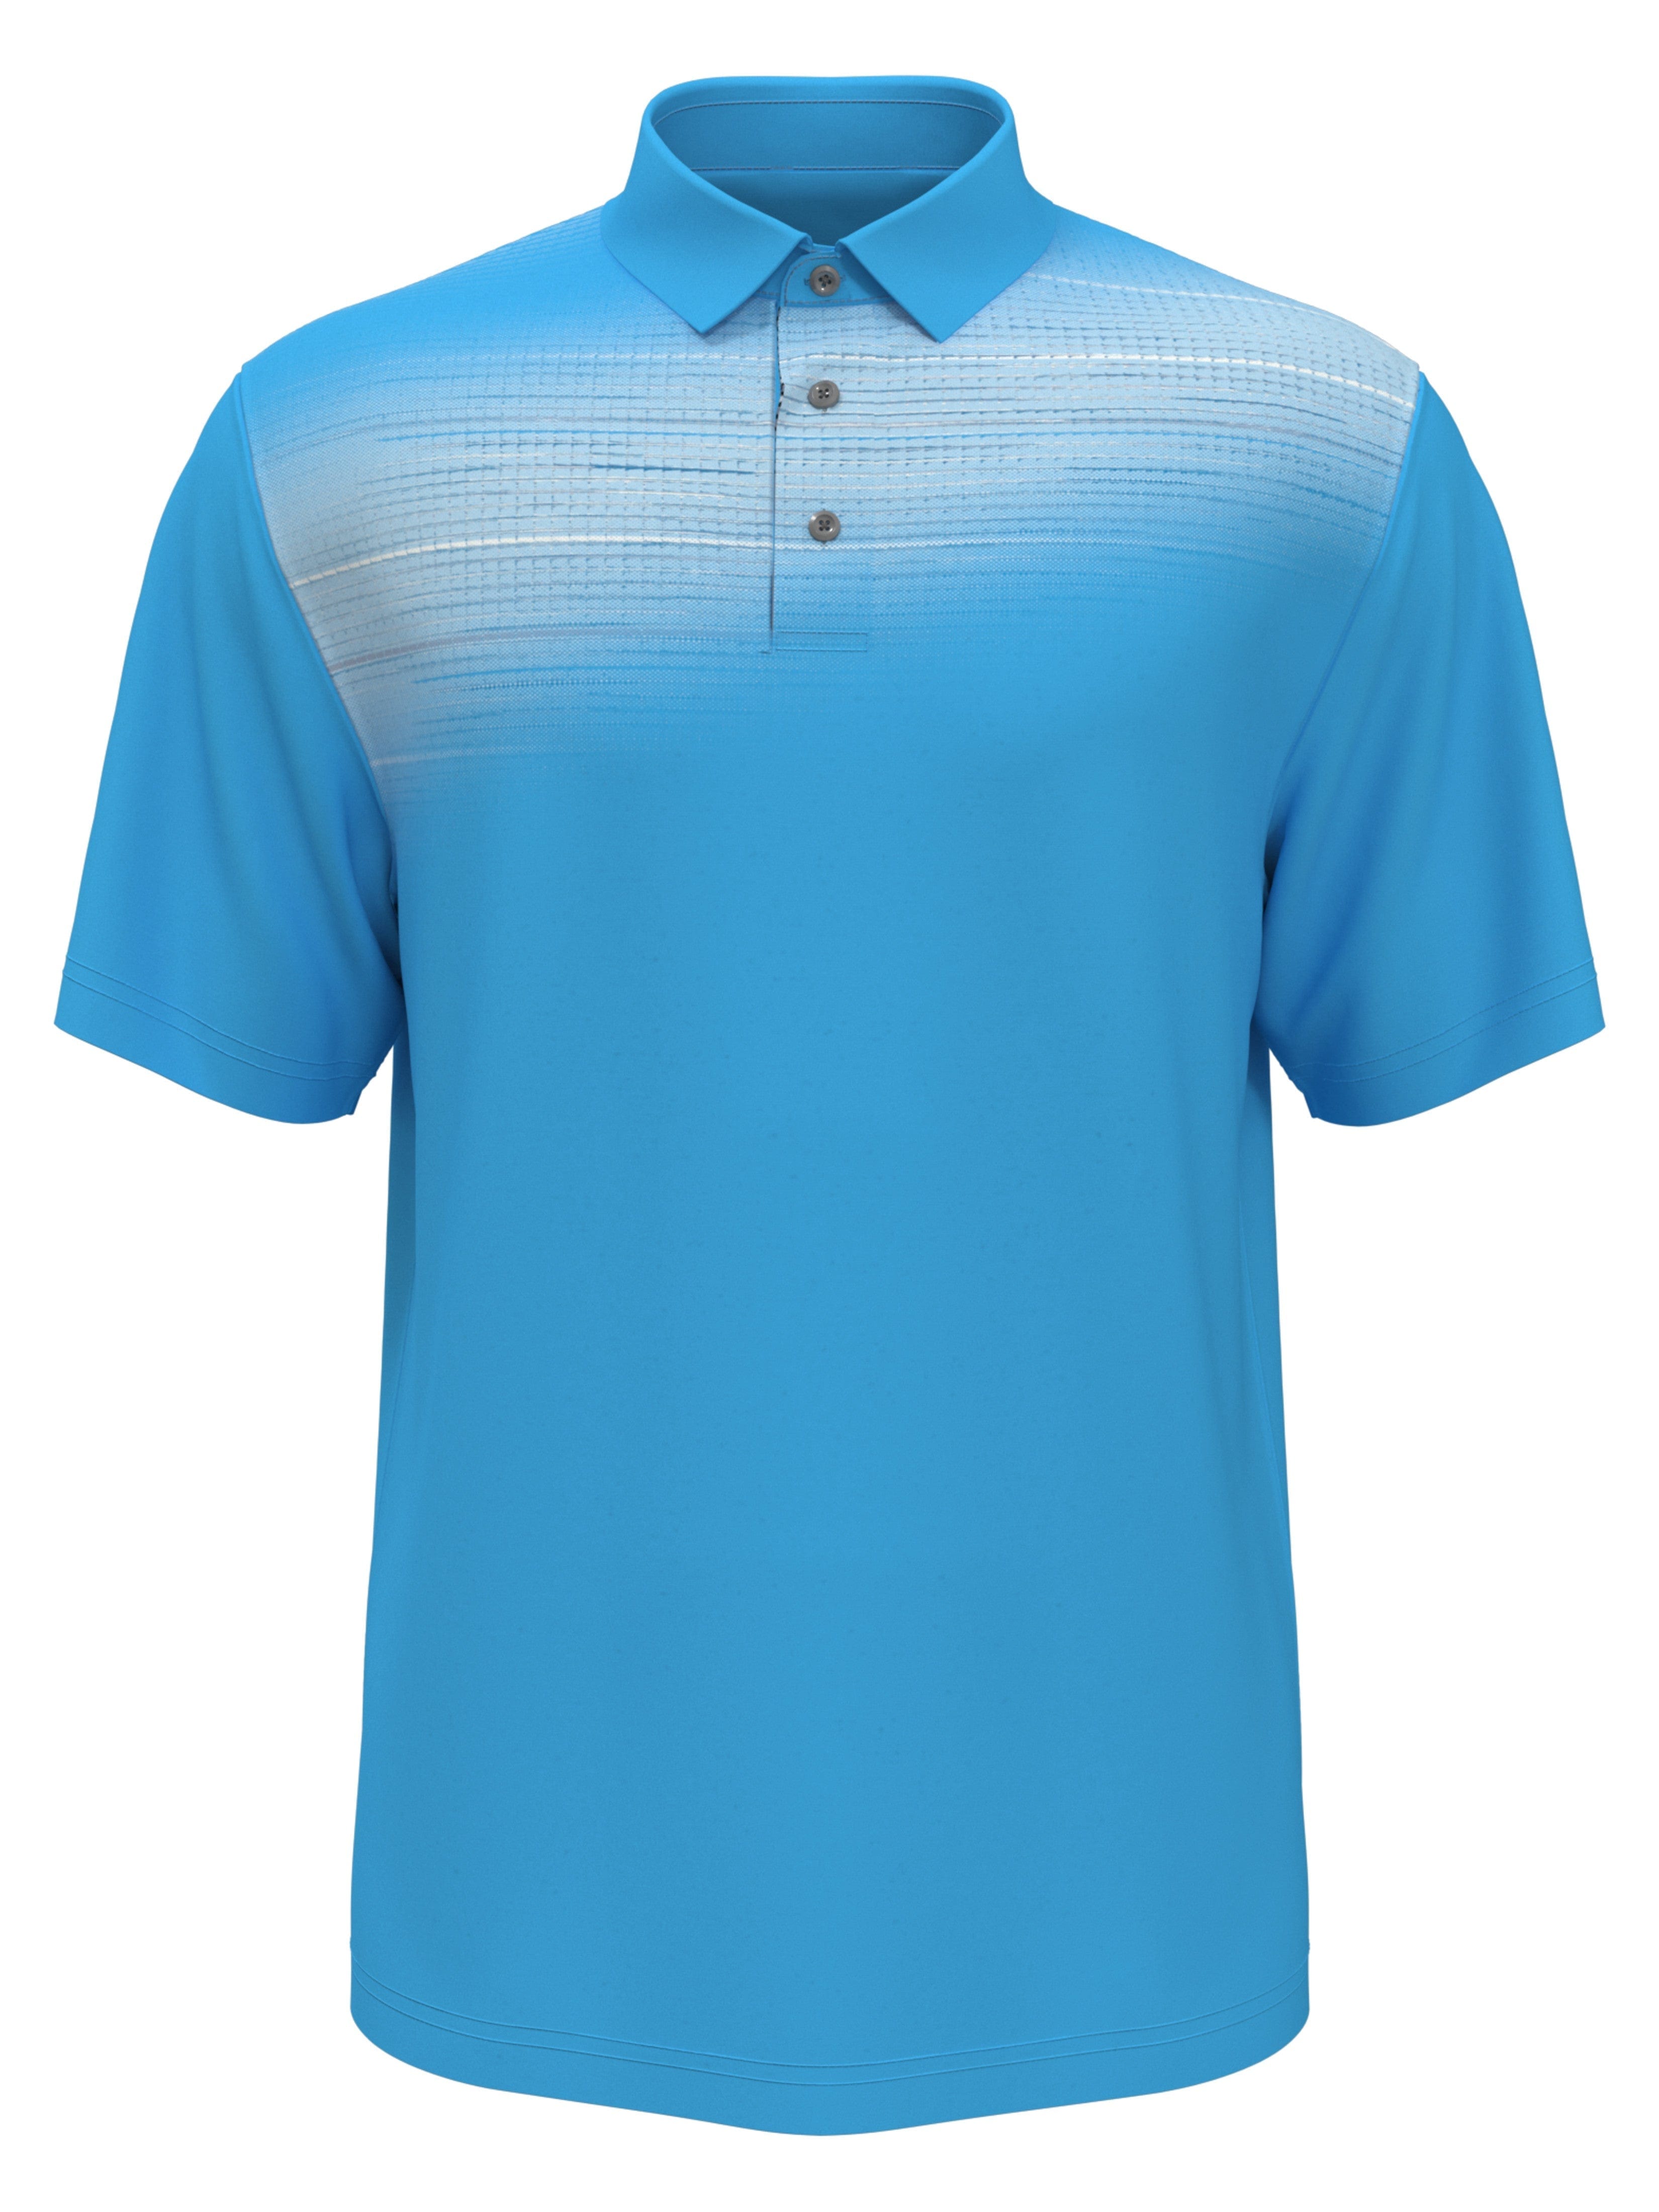 PGA TOUR Apparel Boys Amplified Space Dye Golf Polo Shirt, Size Large, Blue Blossom, 100% Polyester | Golf Apparel Shop